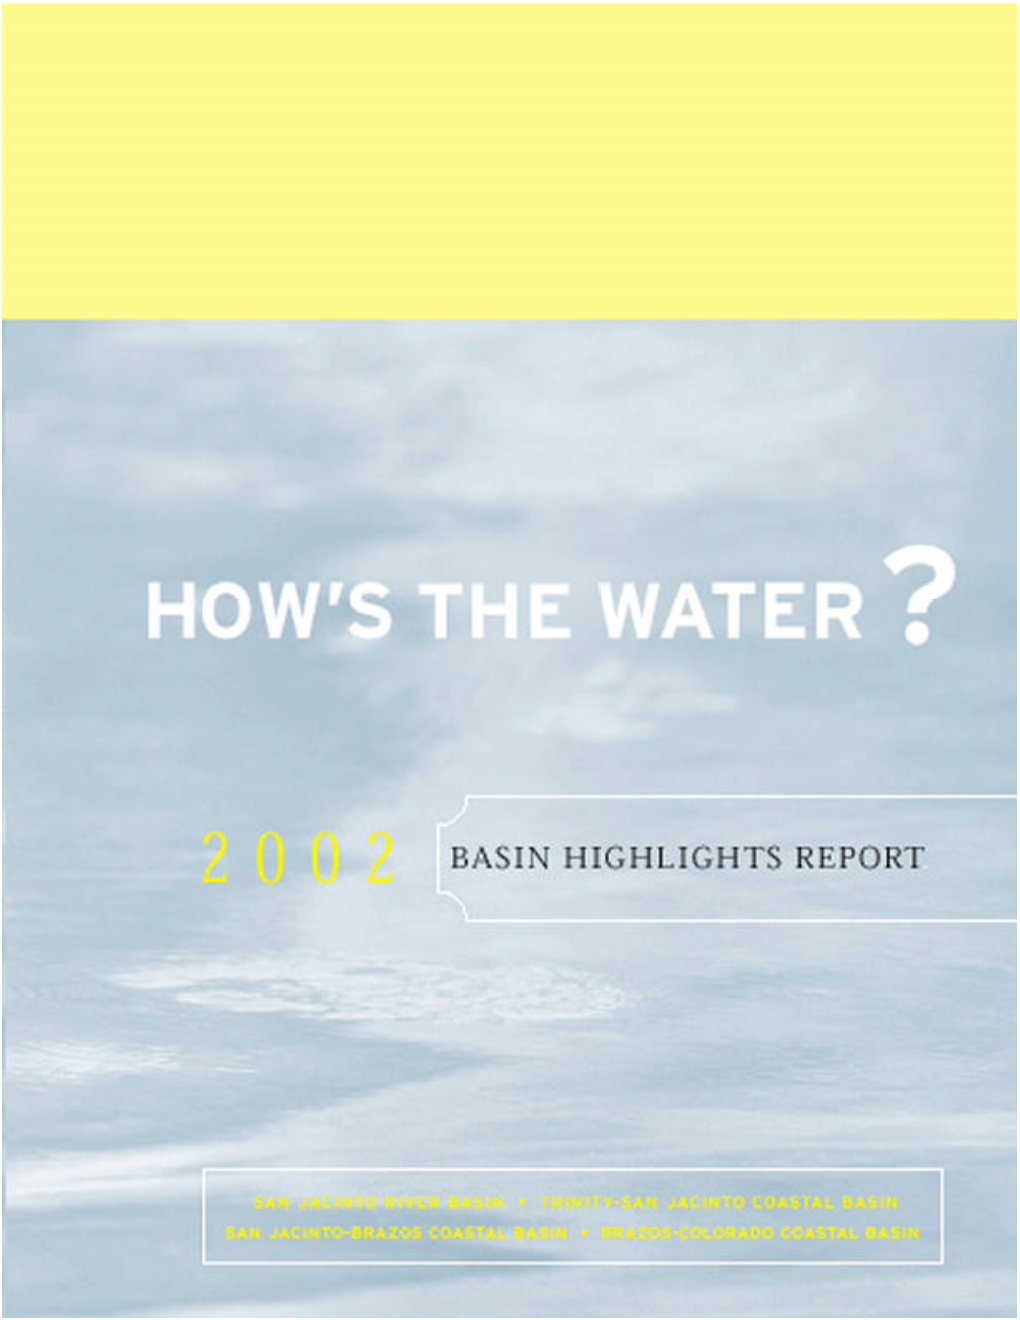 2002 Basin Highlights Report